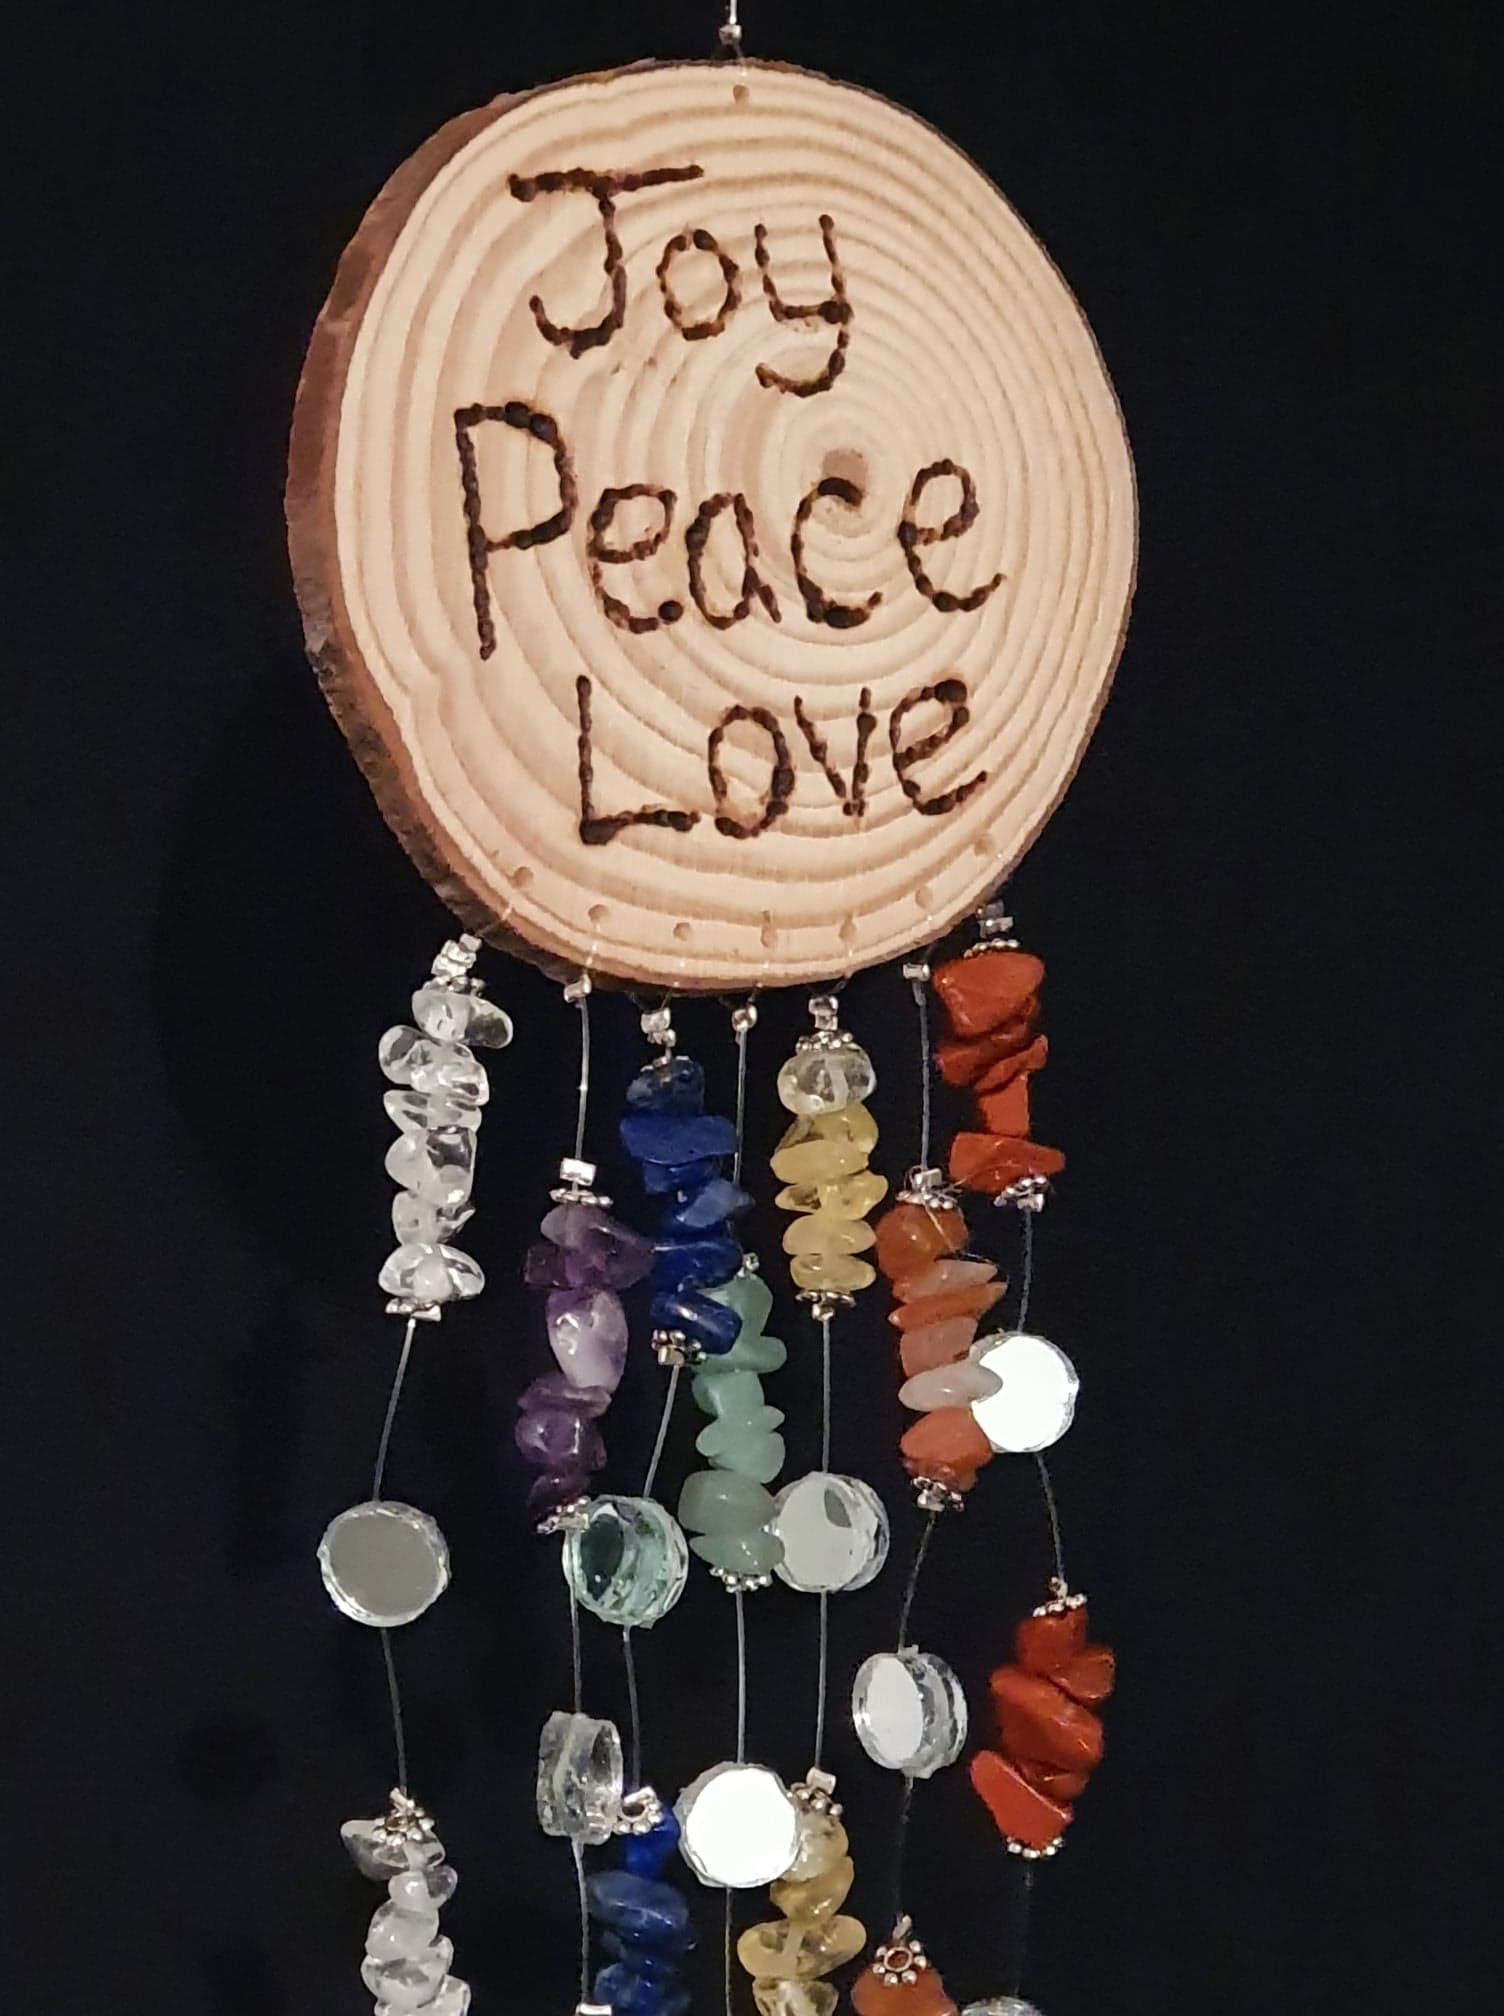 'Rustic Charm' 'JOY PEACE LOVE' chakra crystals decorative hanger